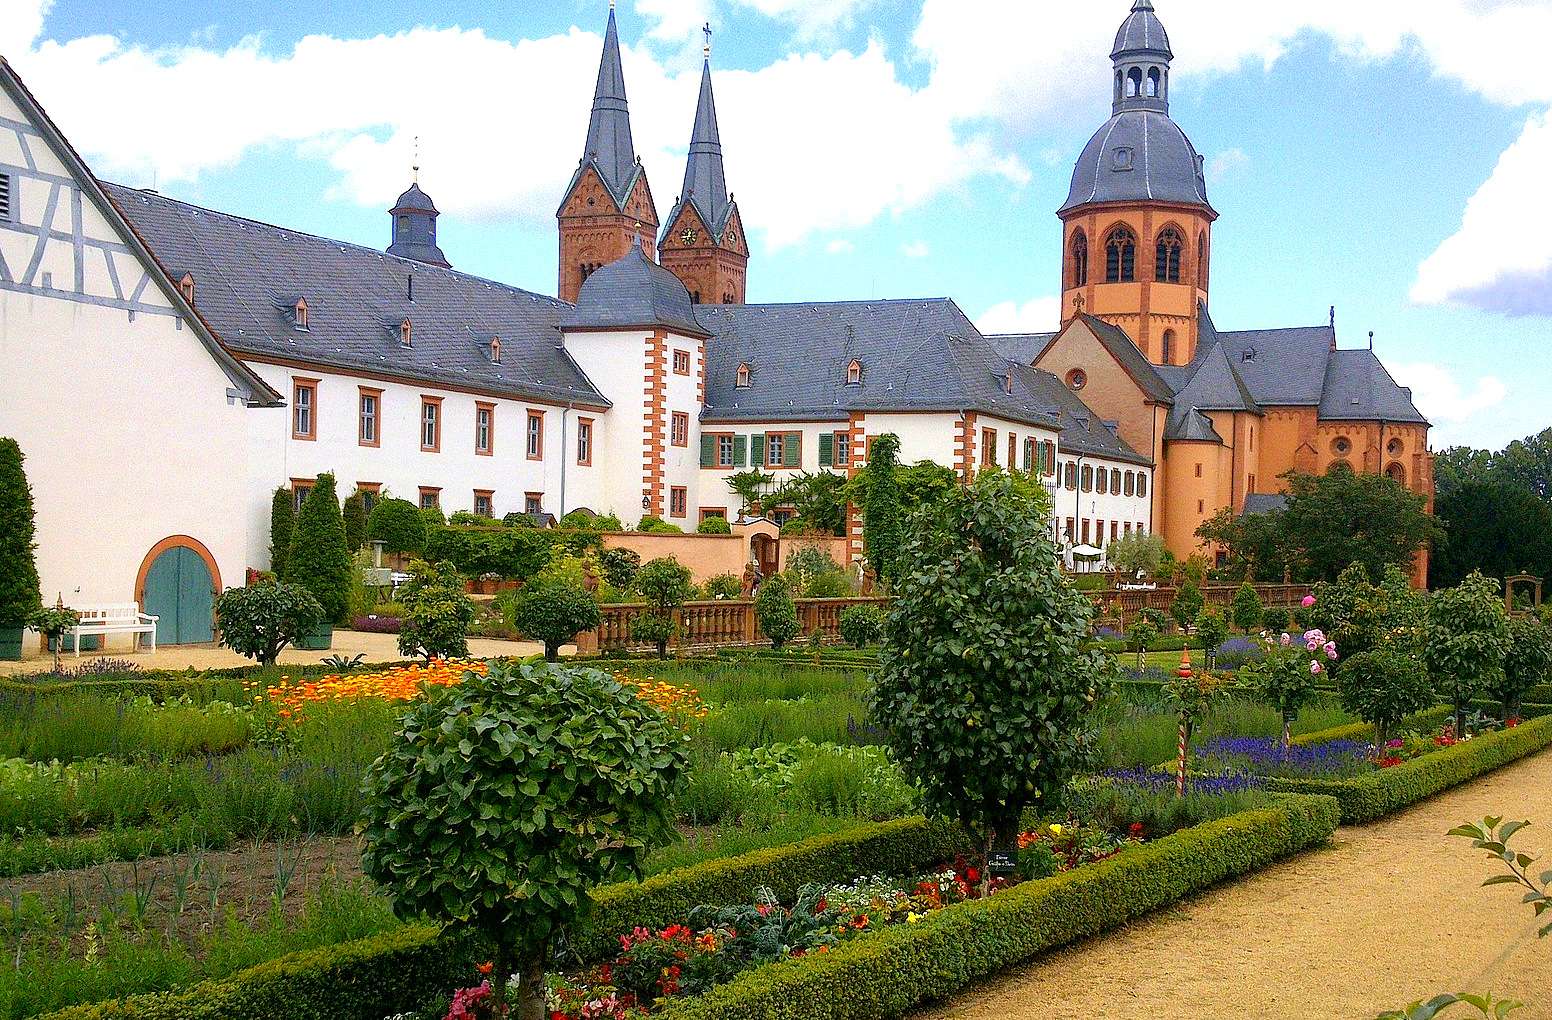 The impressive Benedictine Abbey in Seligenstadt online puzzle